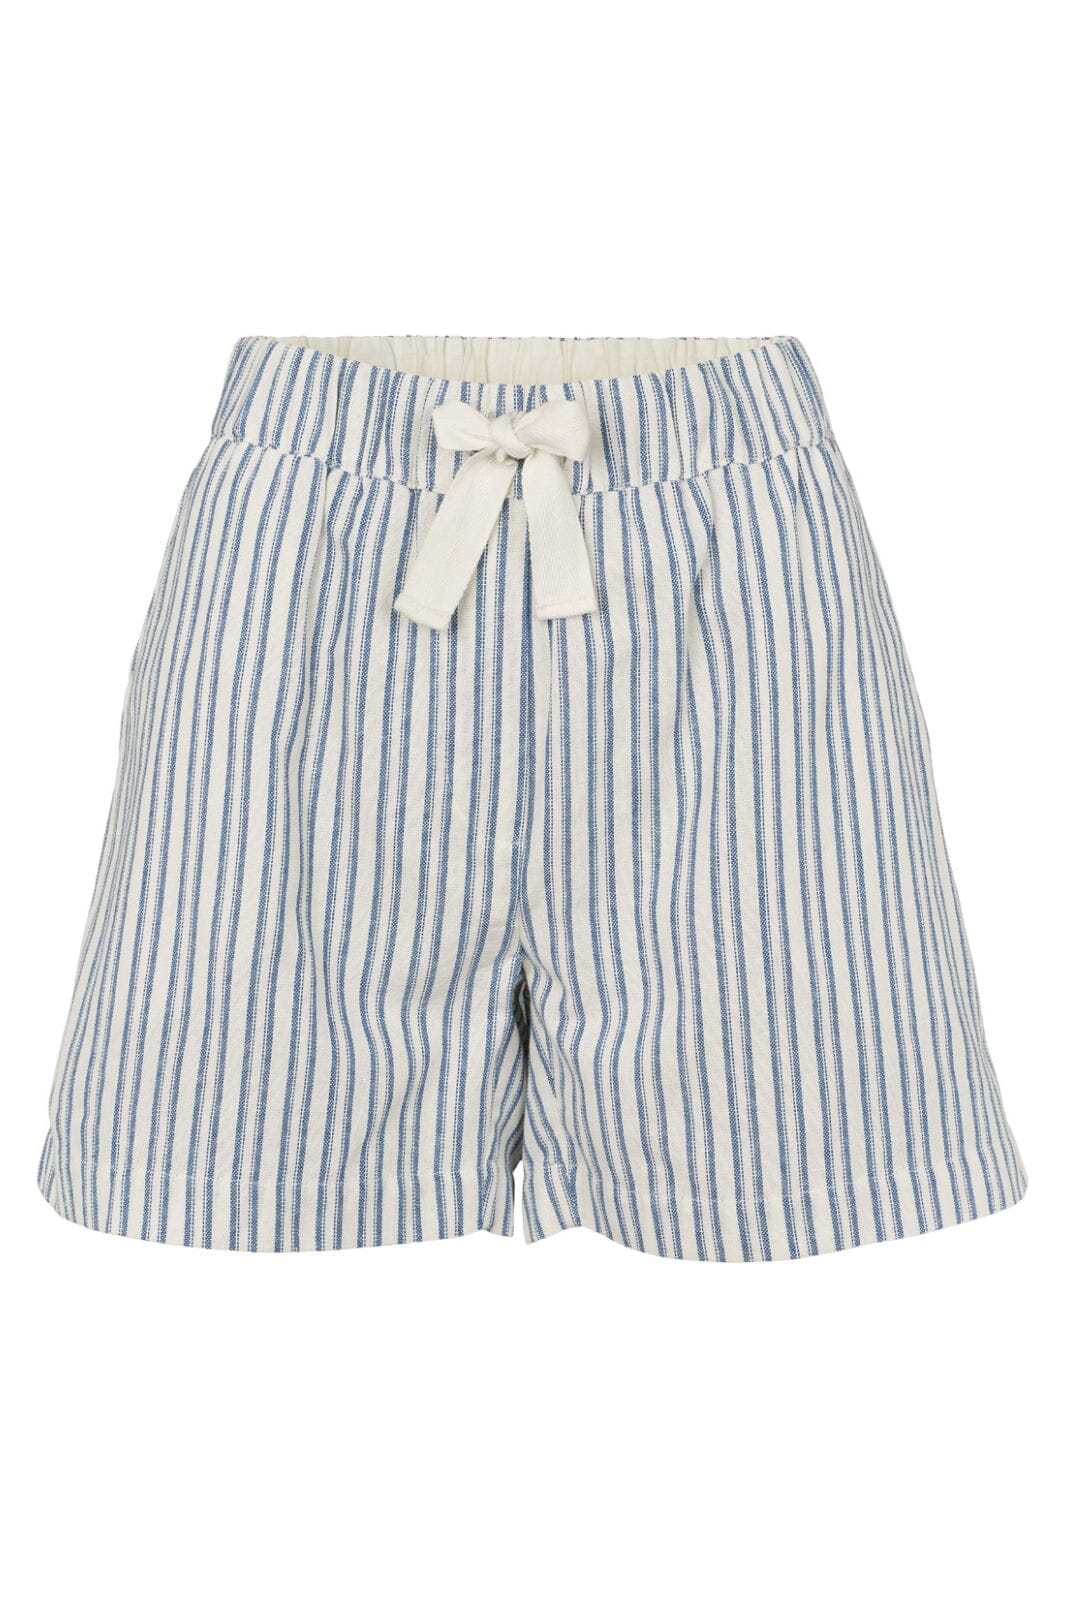 Basic Apparel - Trudie Shorts - 688 Birch / Classic Blue Shorts 